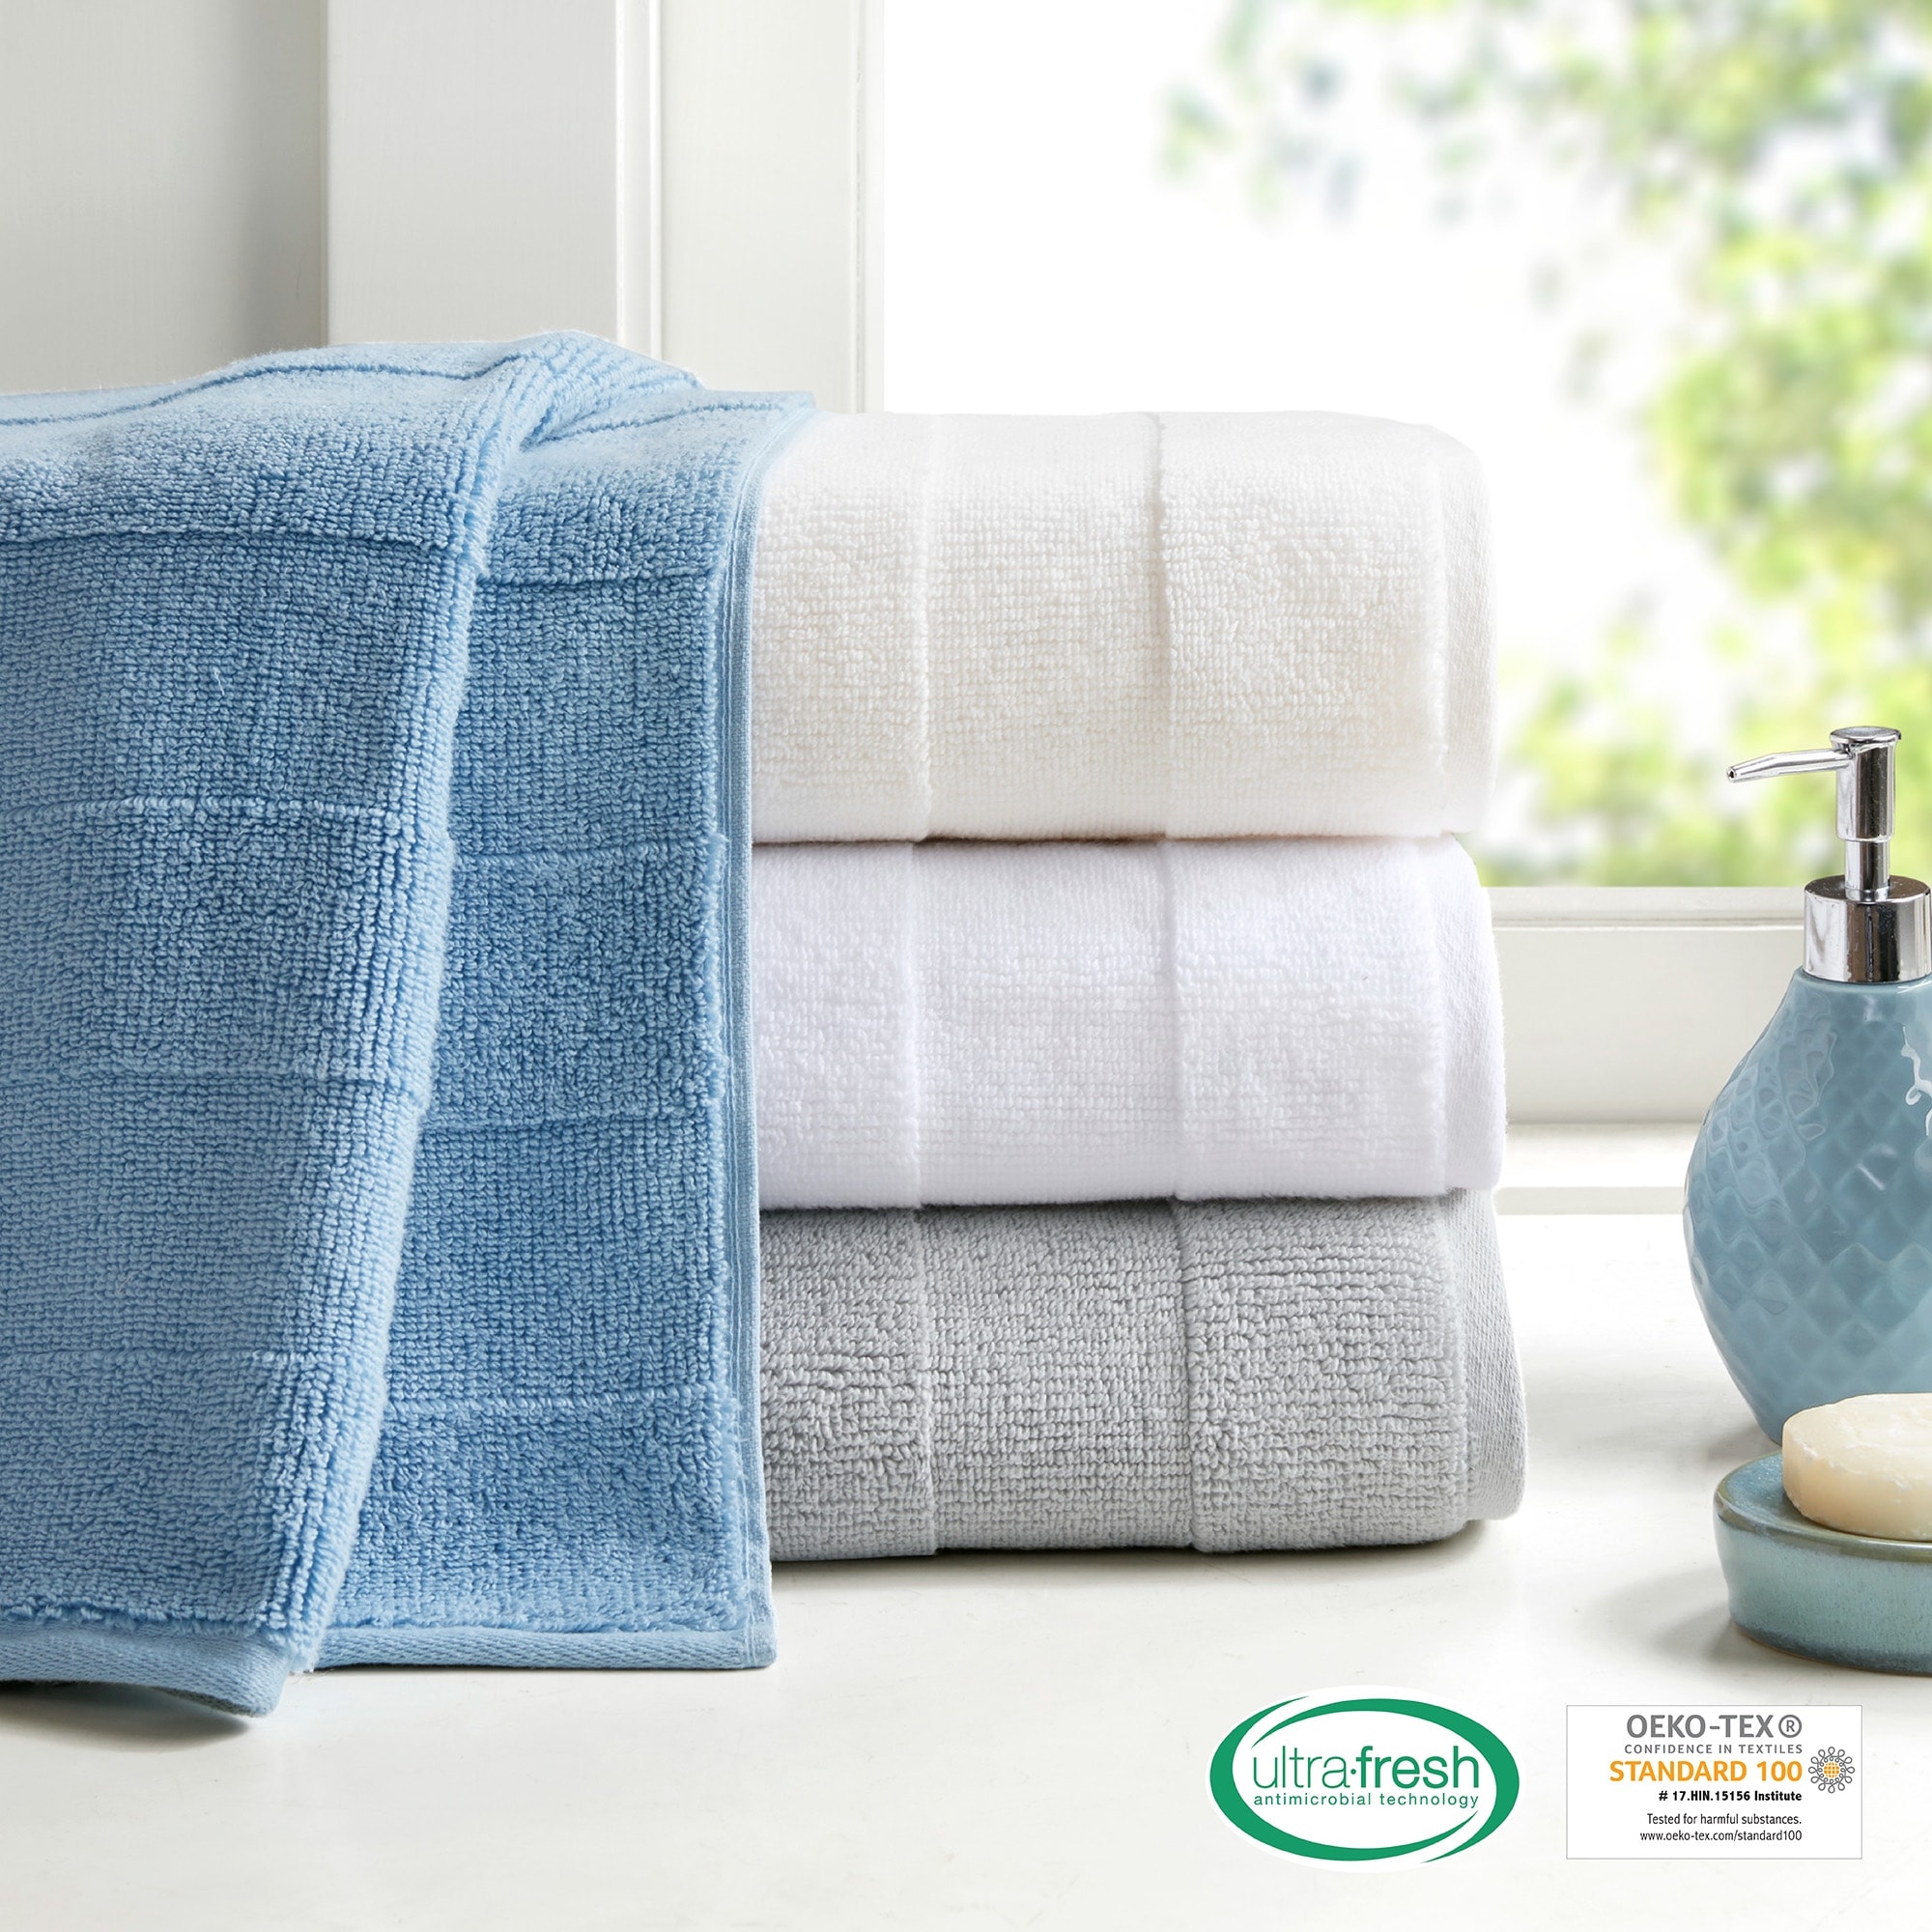 Melissa Linen, Bath Towels, Quick Dry and Absorbent Cotton Towel for Bathroom, Set of 2, Ocean Blue